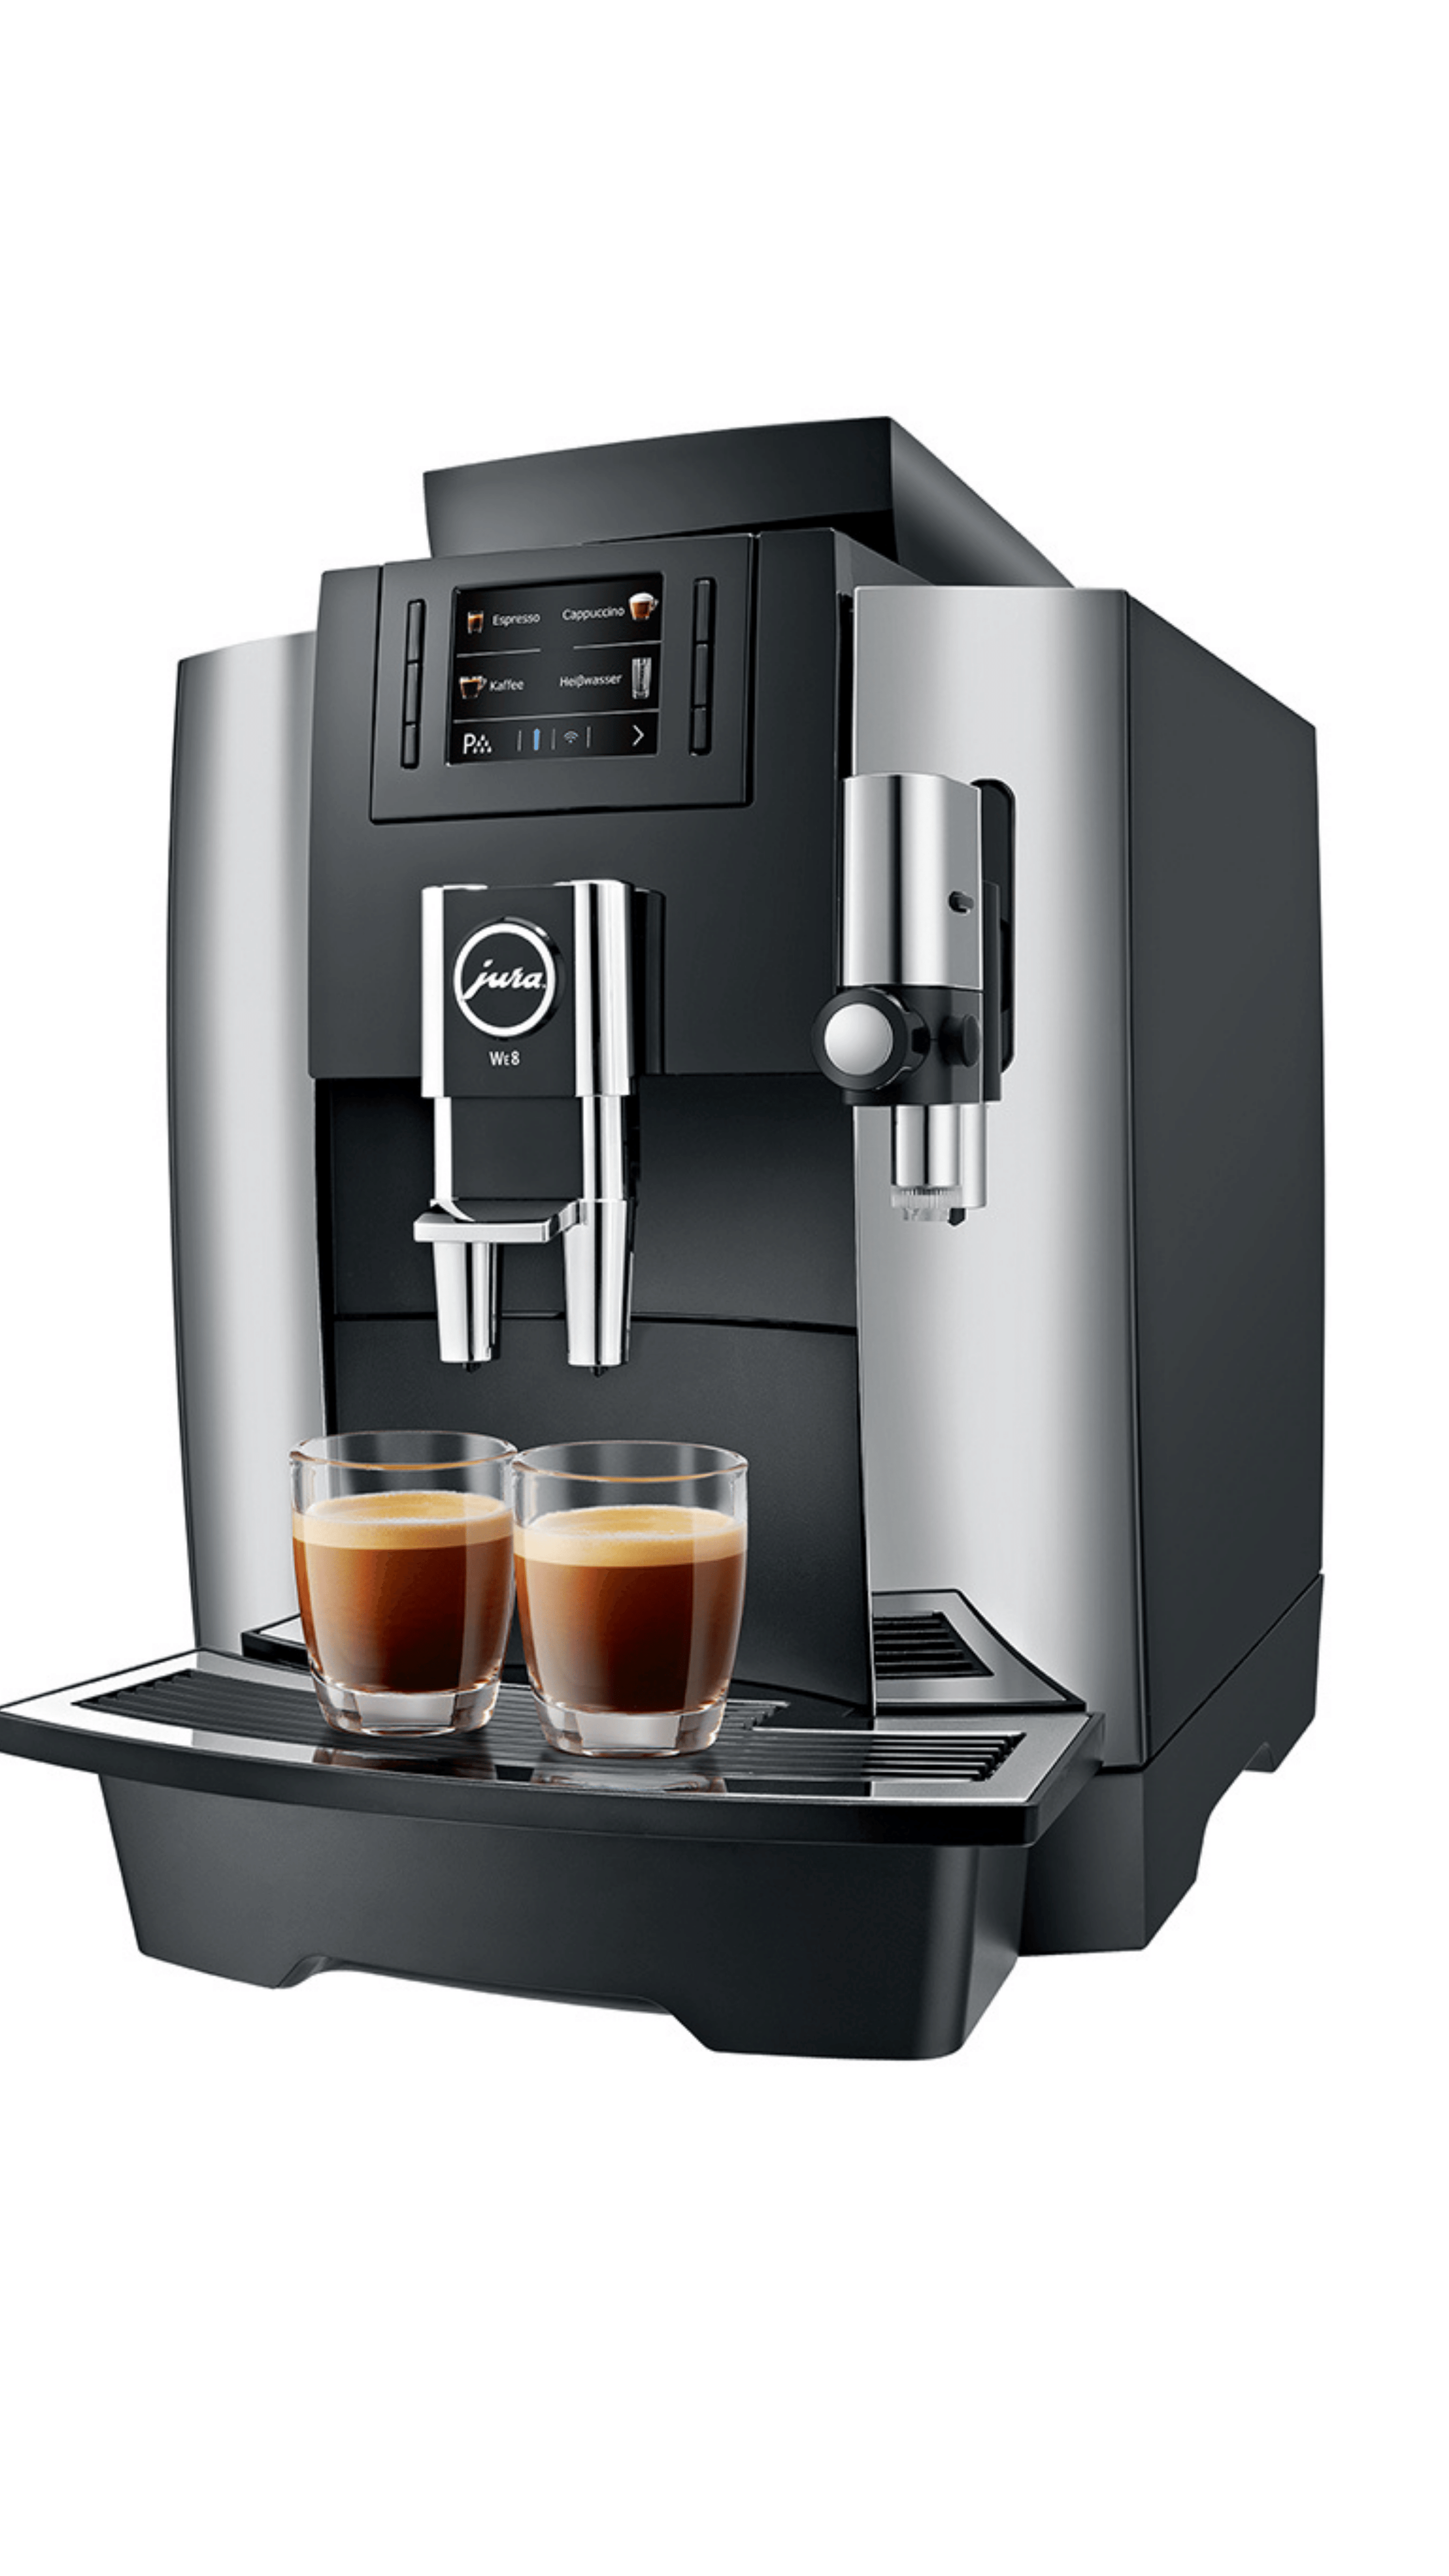 Jura WE8 Bean to Cup Coffee Machine (Chrome)